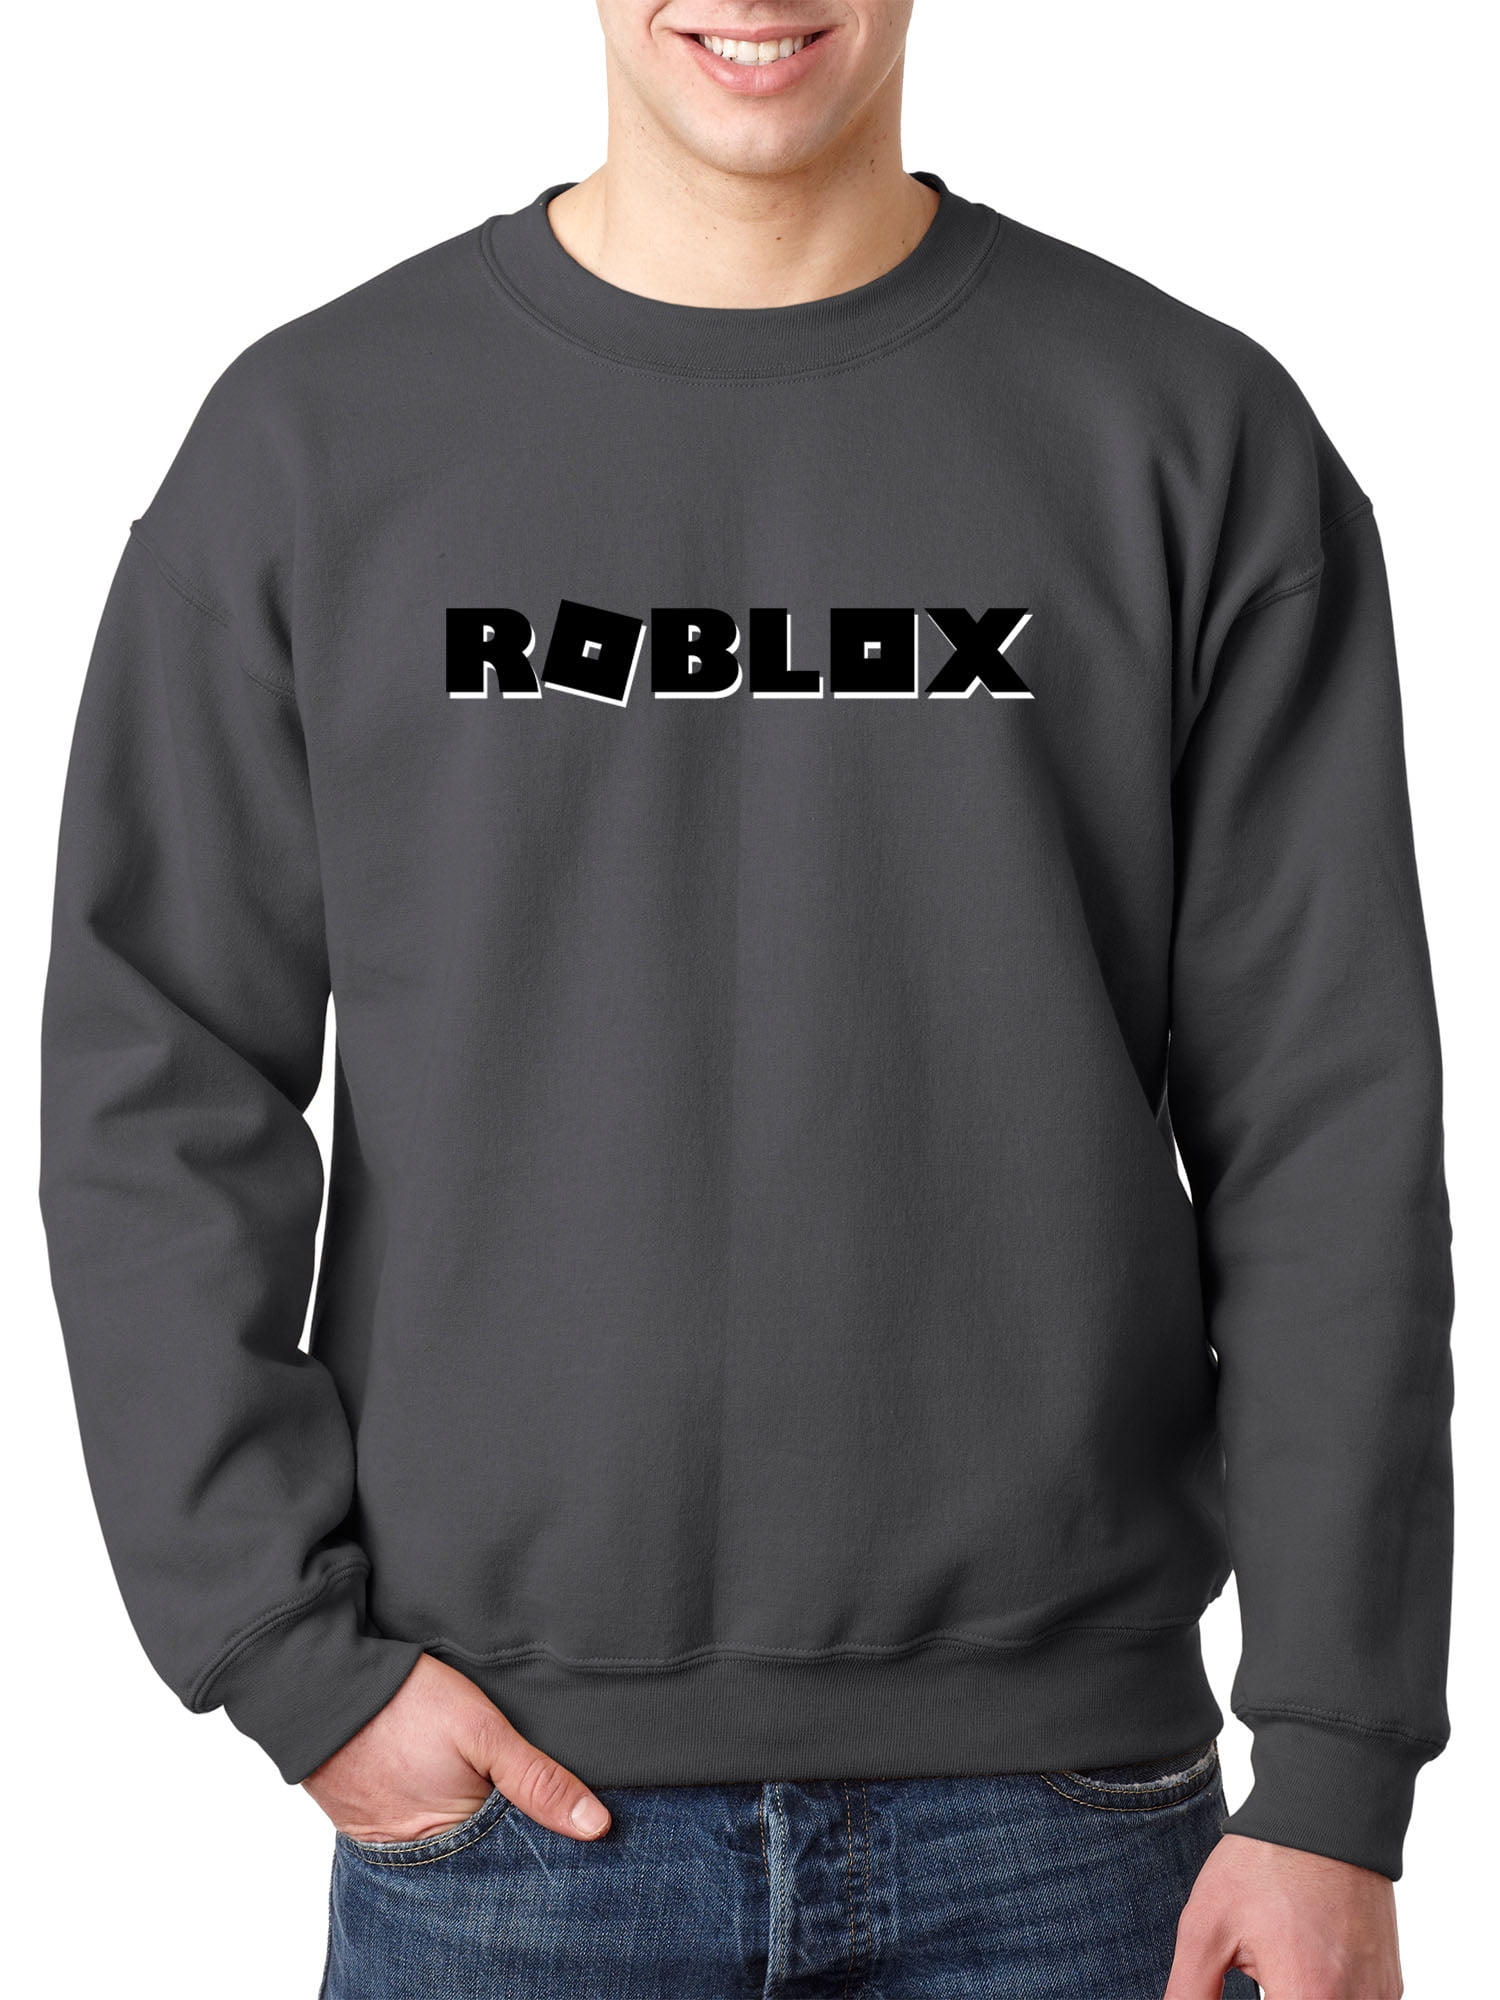 New Way 1168 Crewneck Roblox Block Logo Game Accent Sweatshirt Xl Charcoal Walmart Com - hoodie free roblox t shirt